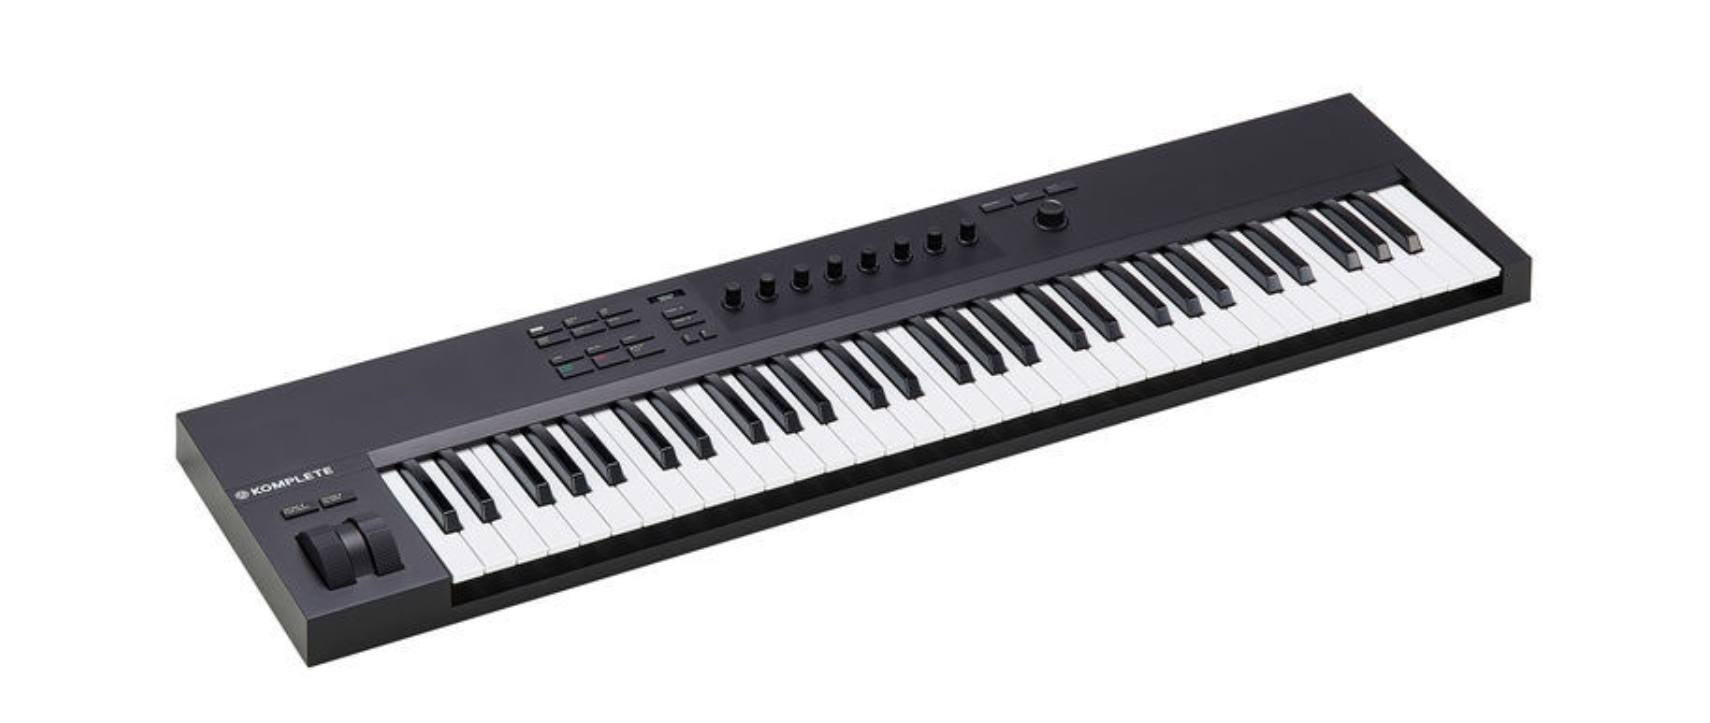 native instruments komplete kontrol s25 controller keyboard